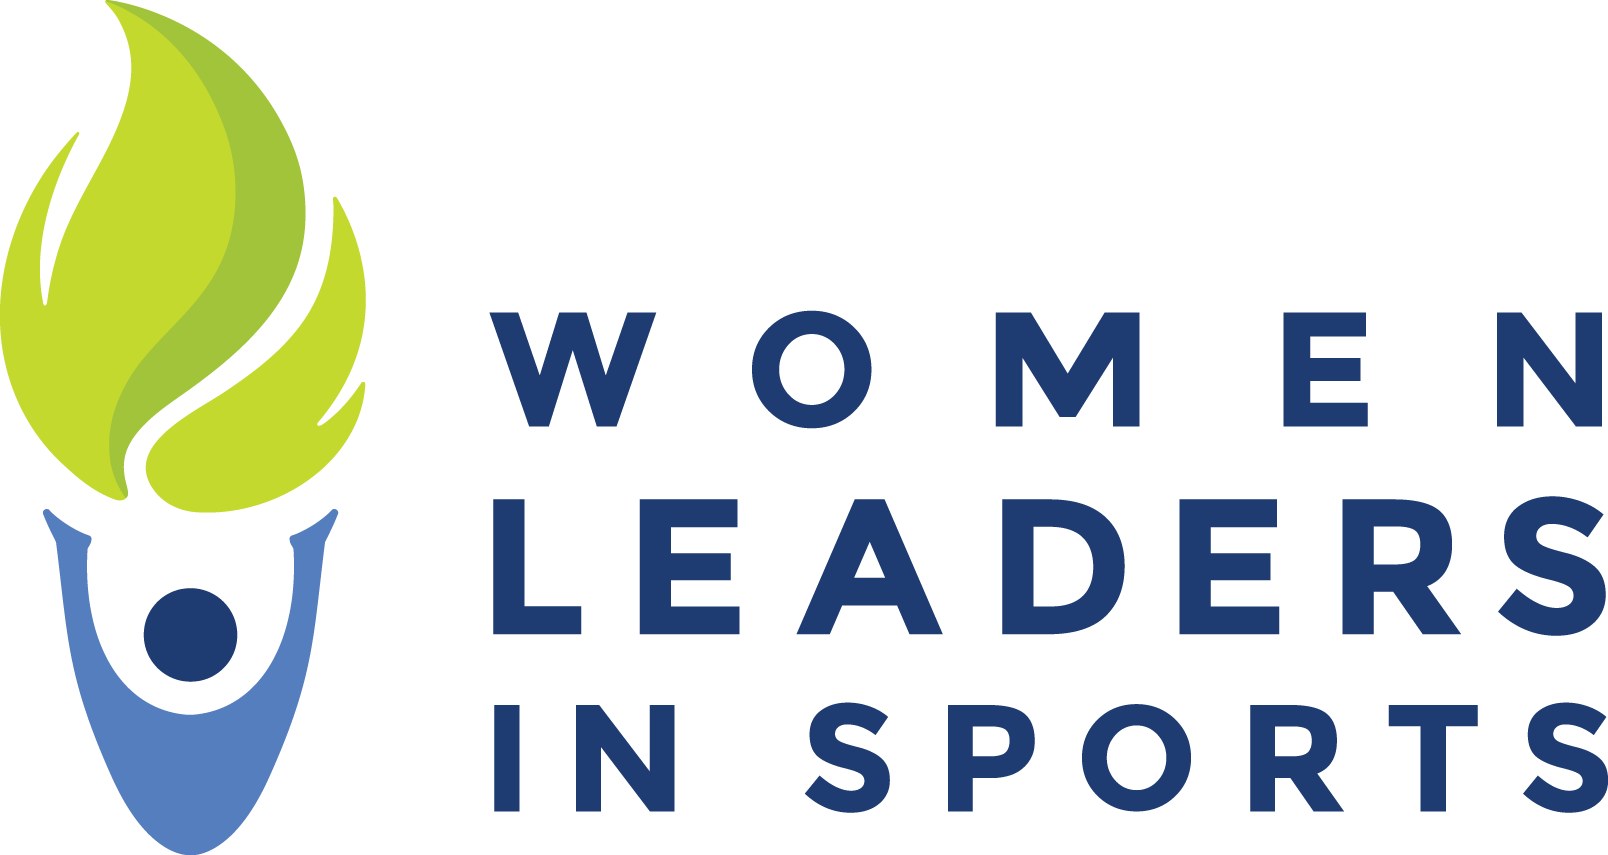 https://womenleadersinsports.org/images/wl/women-leaders-png-logos/square%20logo.png